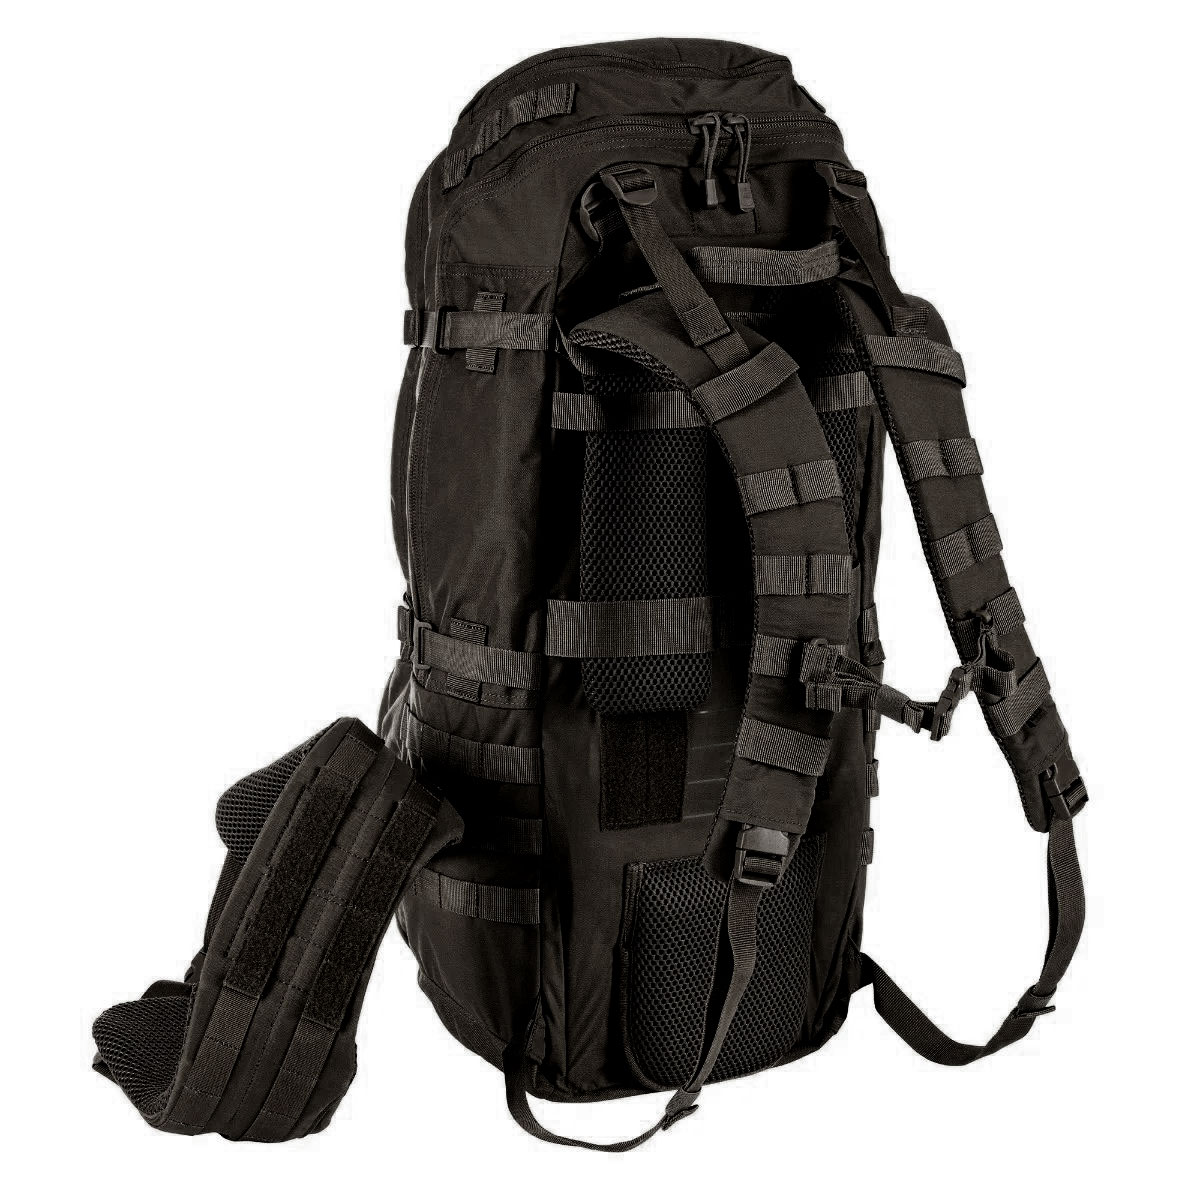 Plecak 5.11 RUSH100 2.0 Backpack 60 l - Black S/M